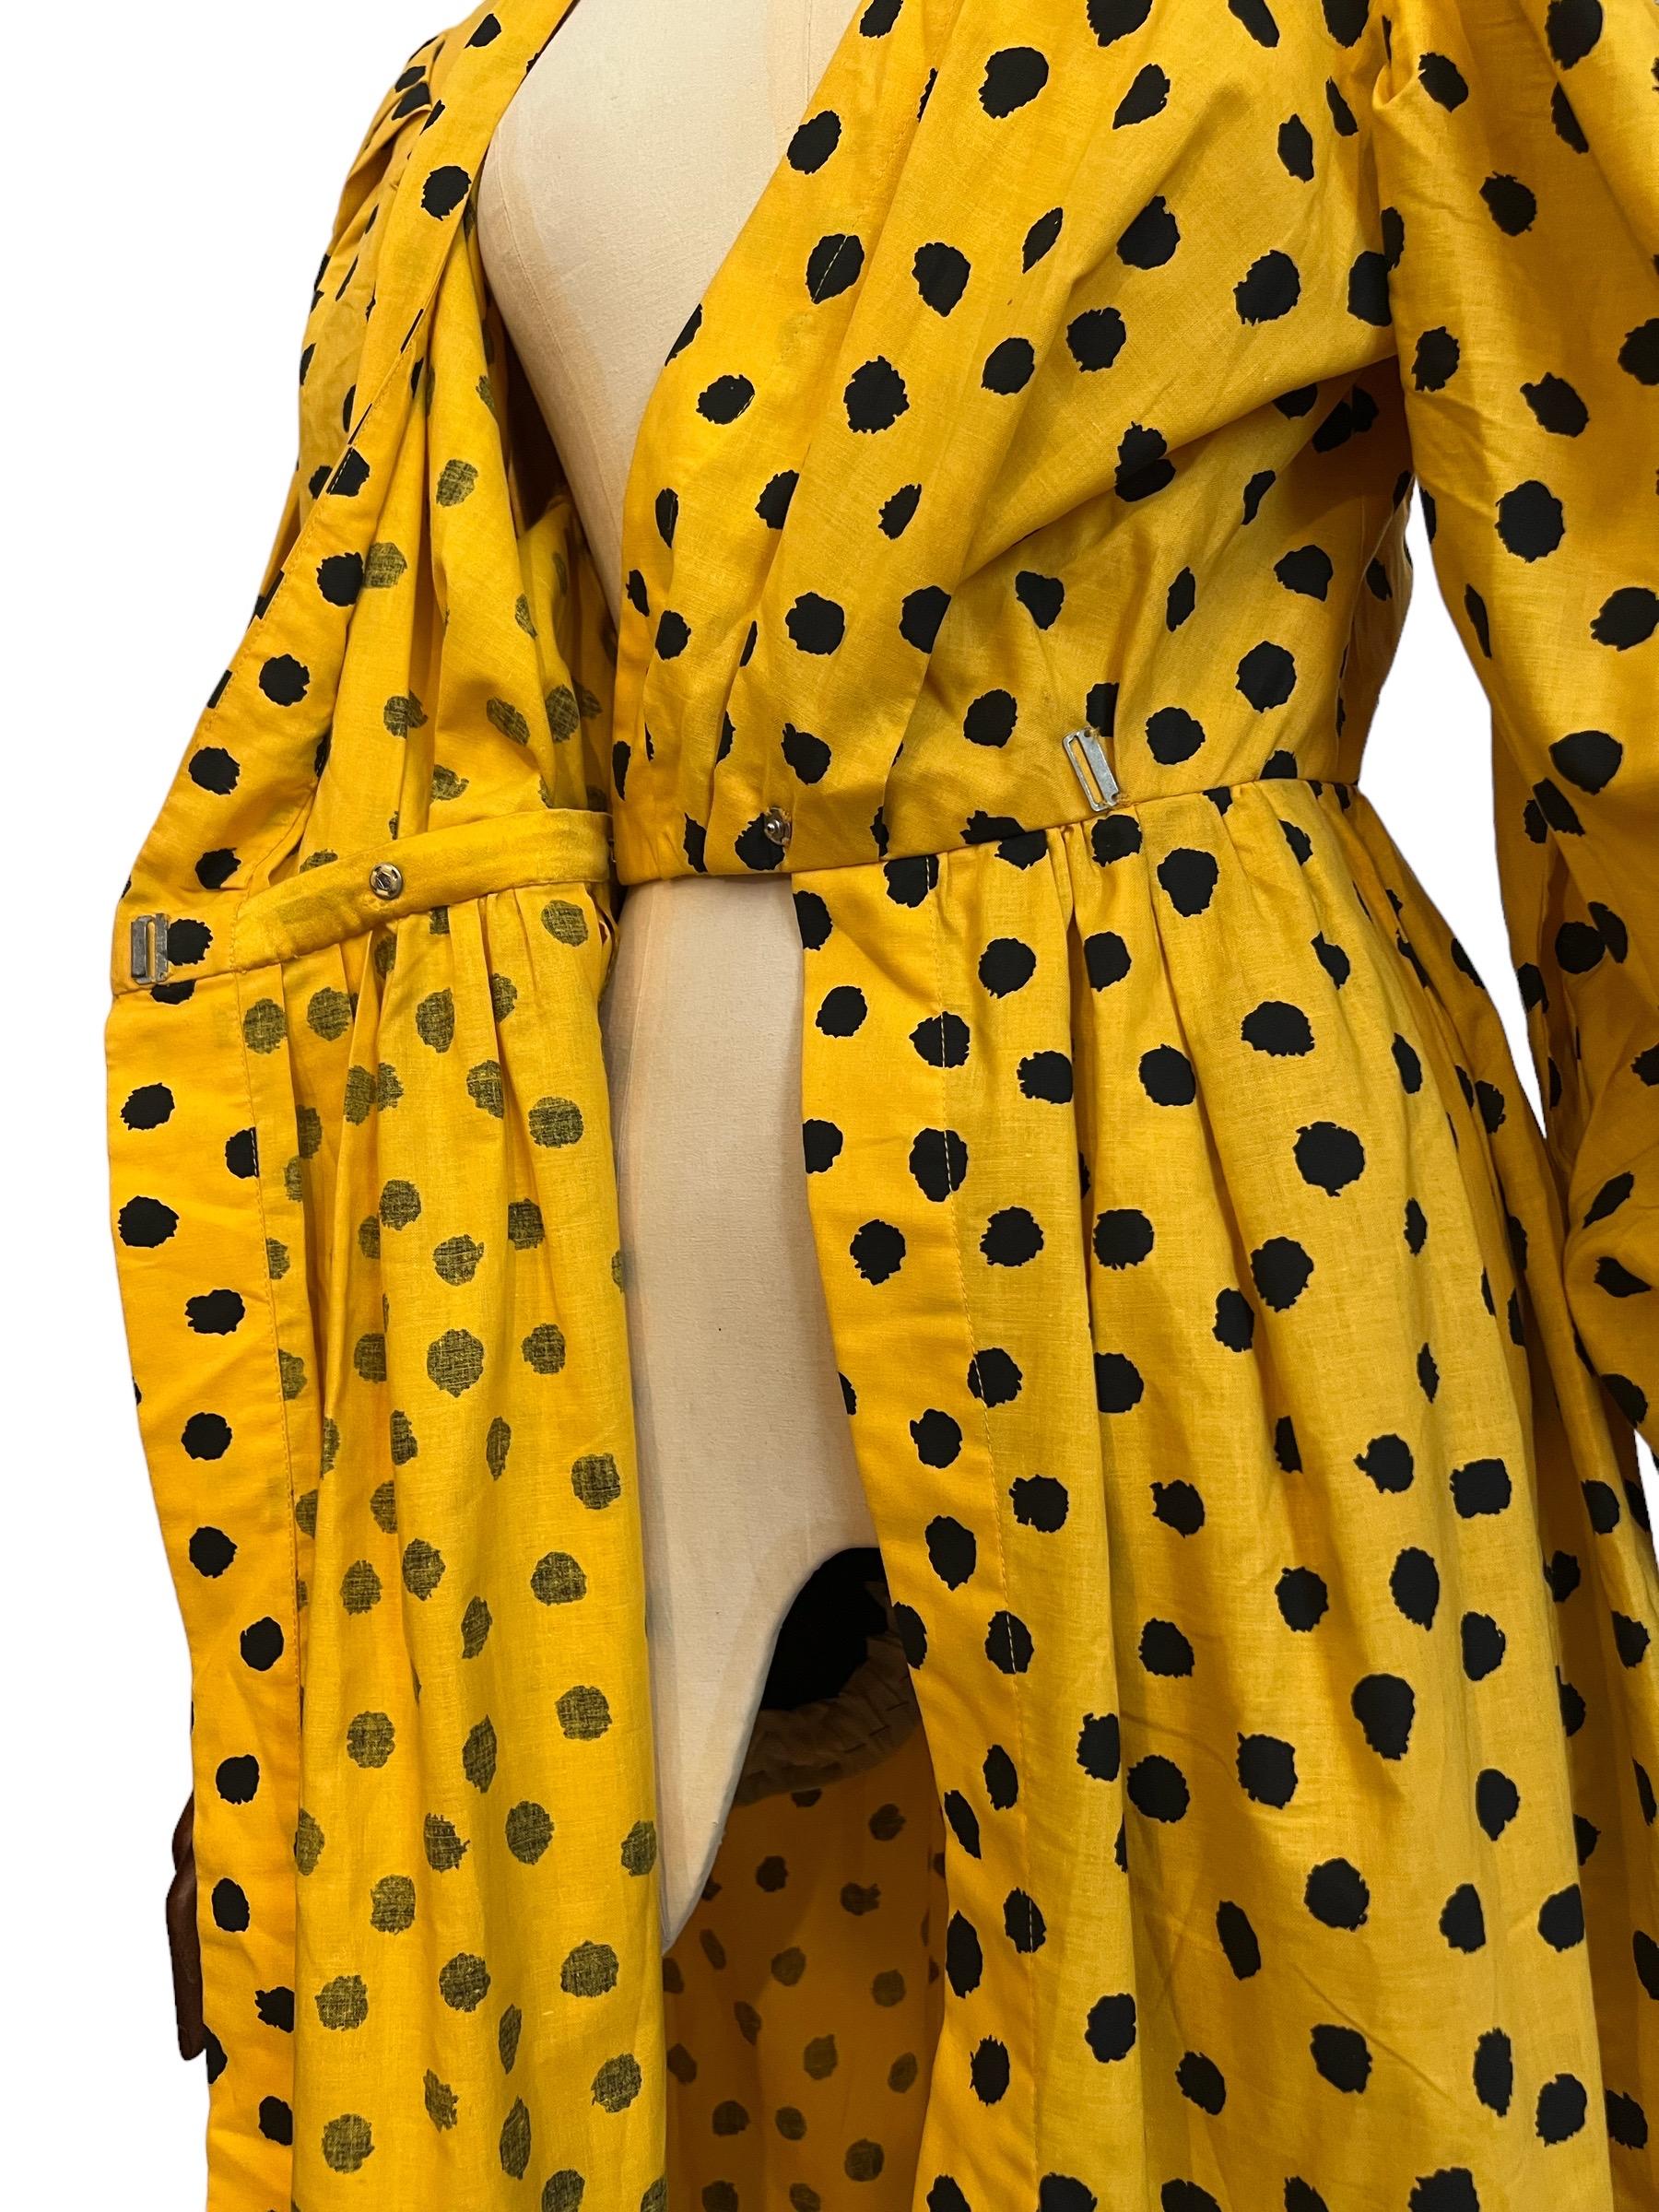 Vintage Yves Saint Laurent Yellow and Black Cotton Polka Dot Dress 9